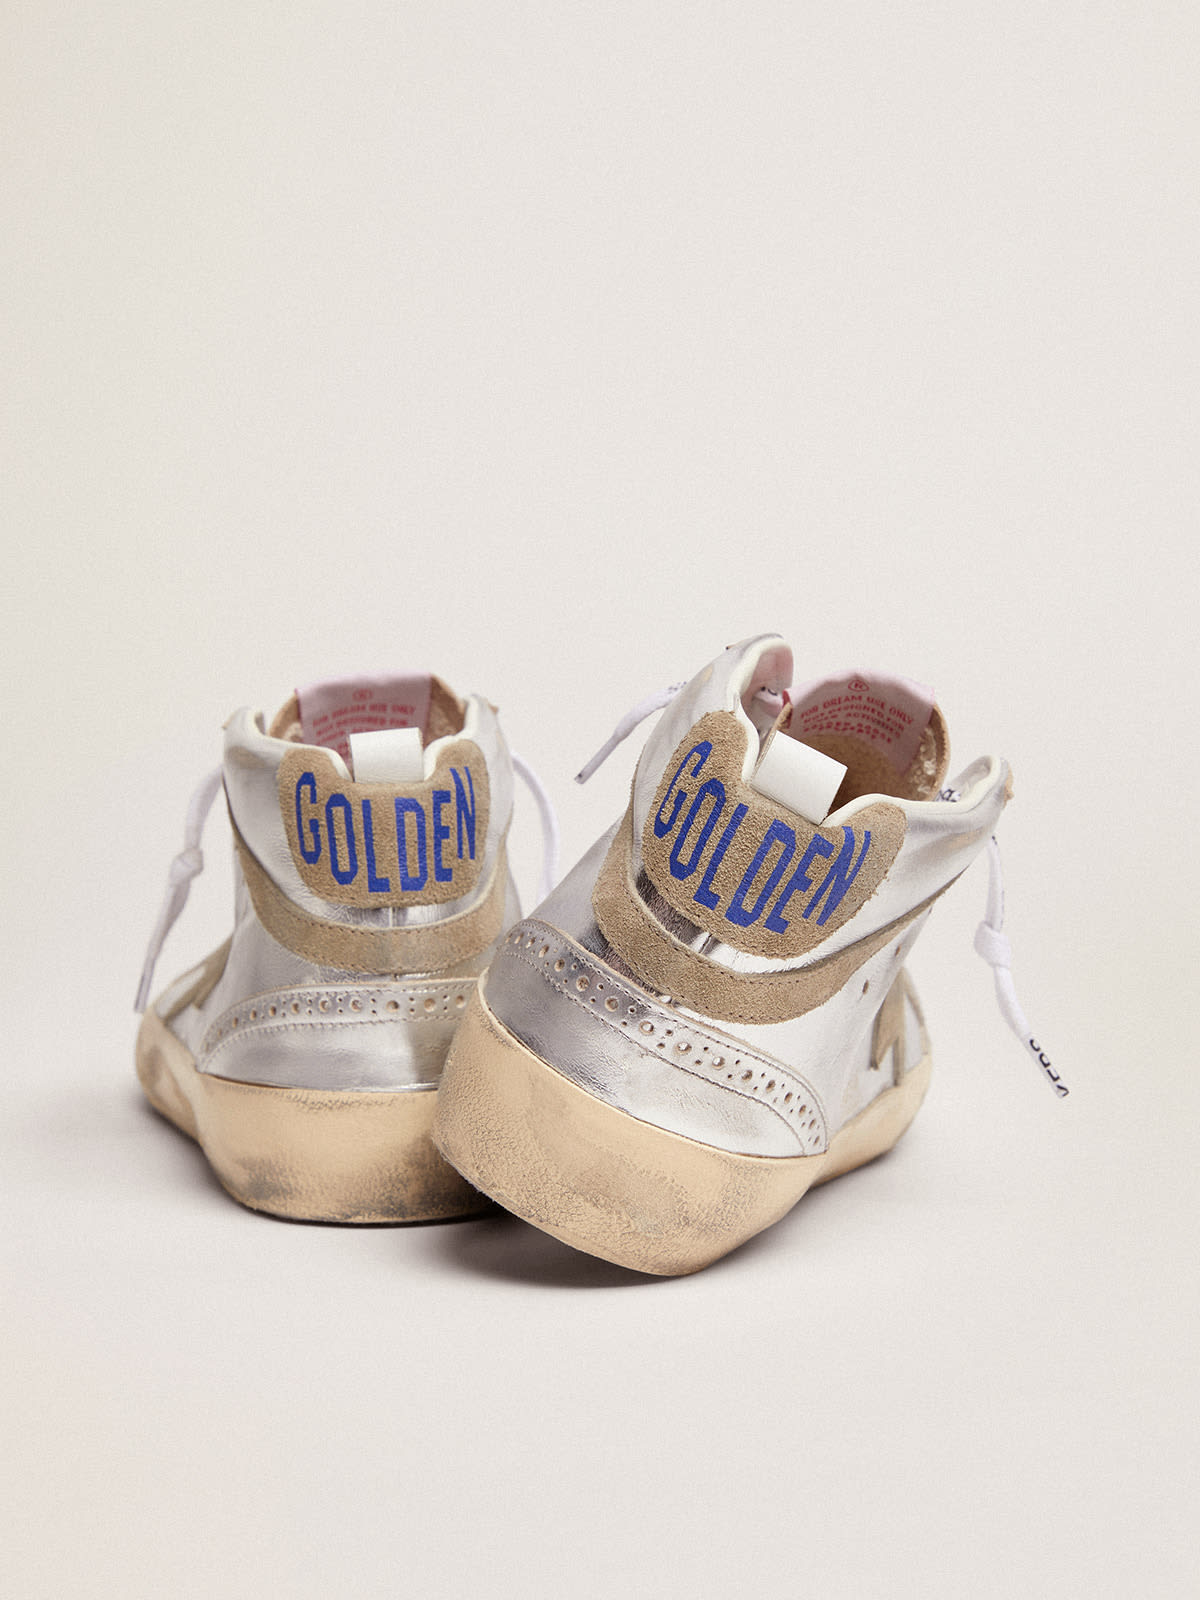 Golden Goose - Sneaker Mid Star in pelle laminata color argento con stella e virgola in suede color tortora in 